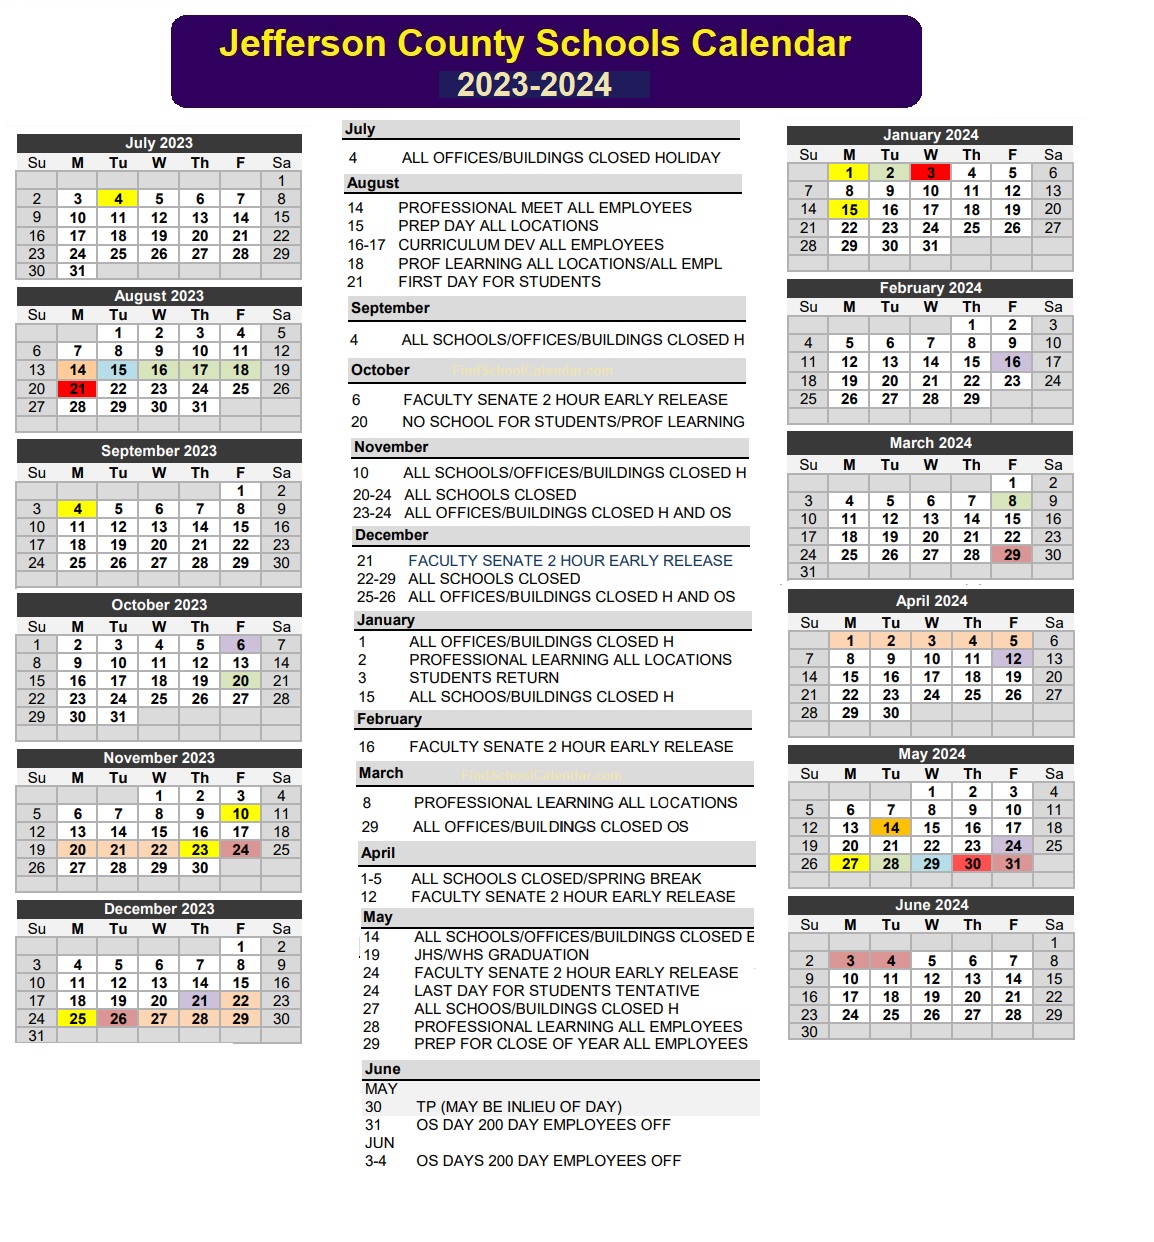 Jefferson County School Calendar 23-24